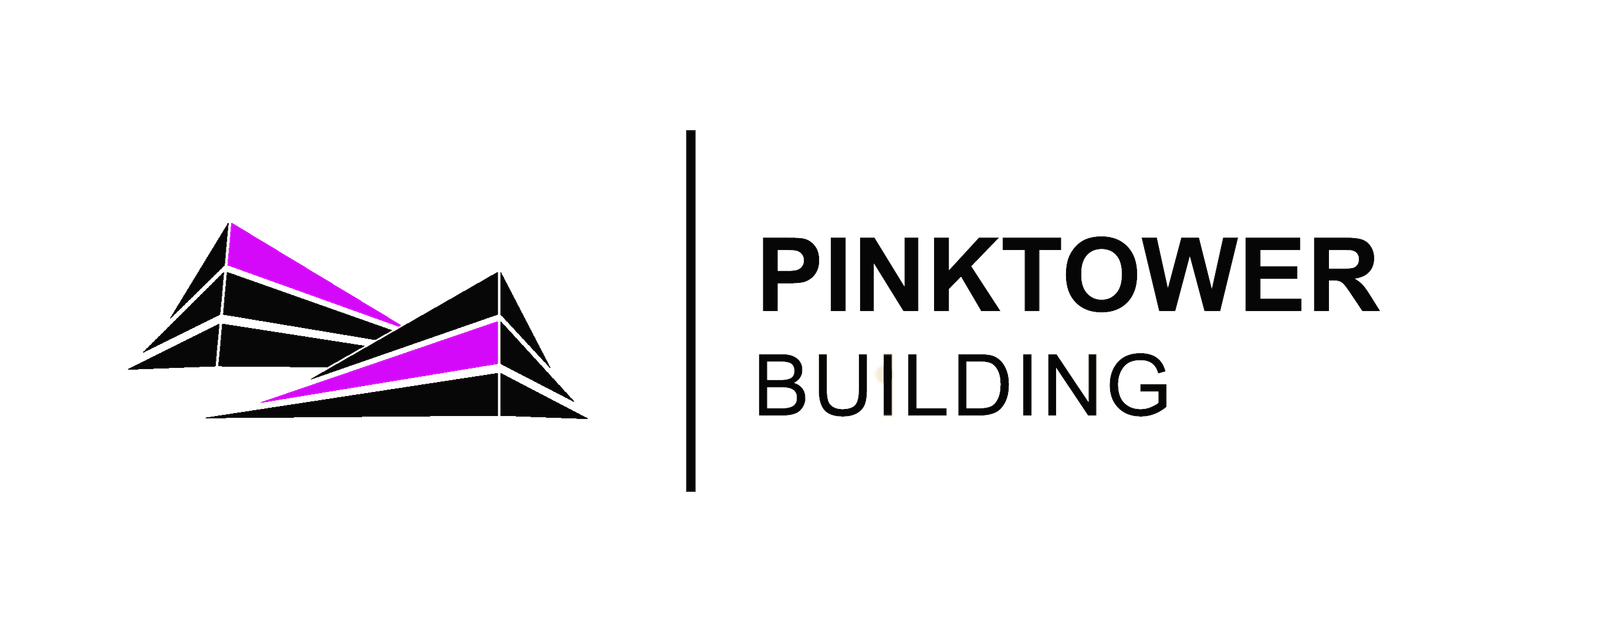 pinktower building logo